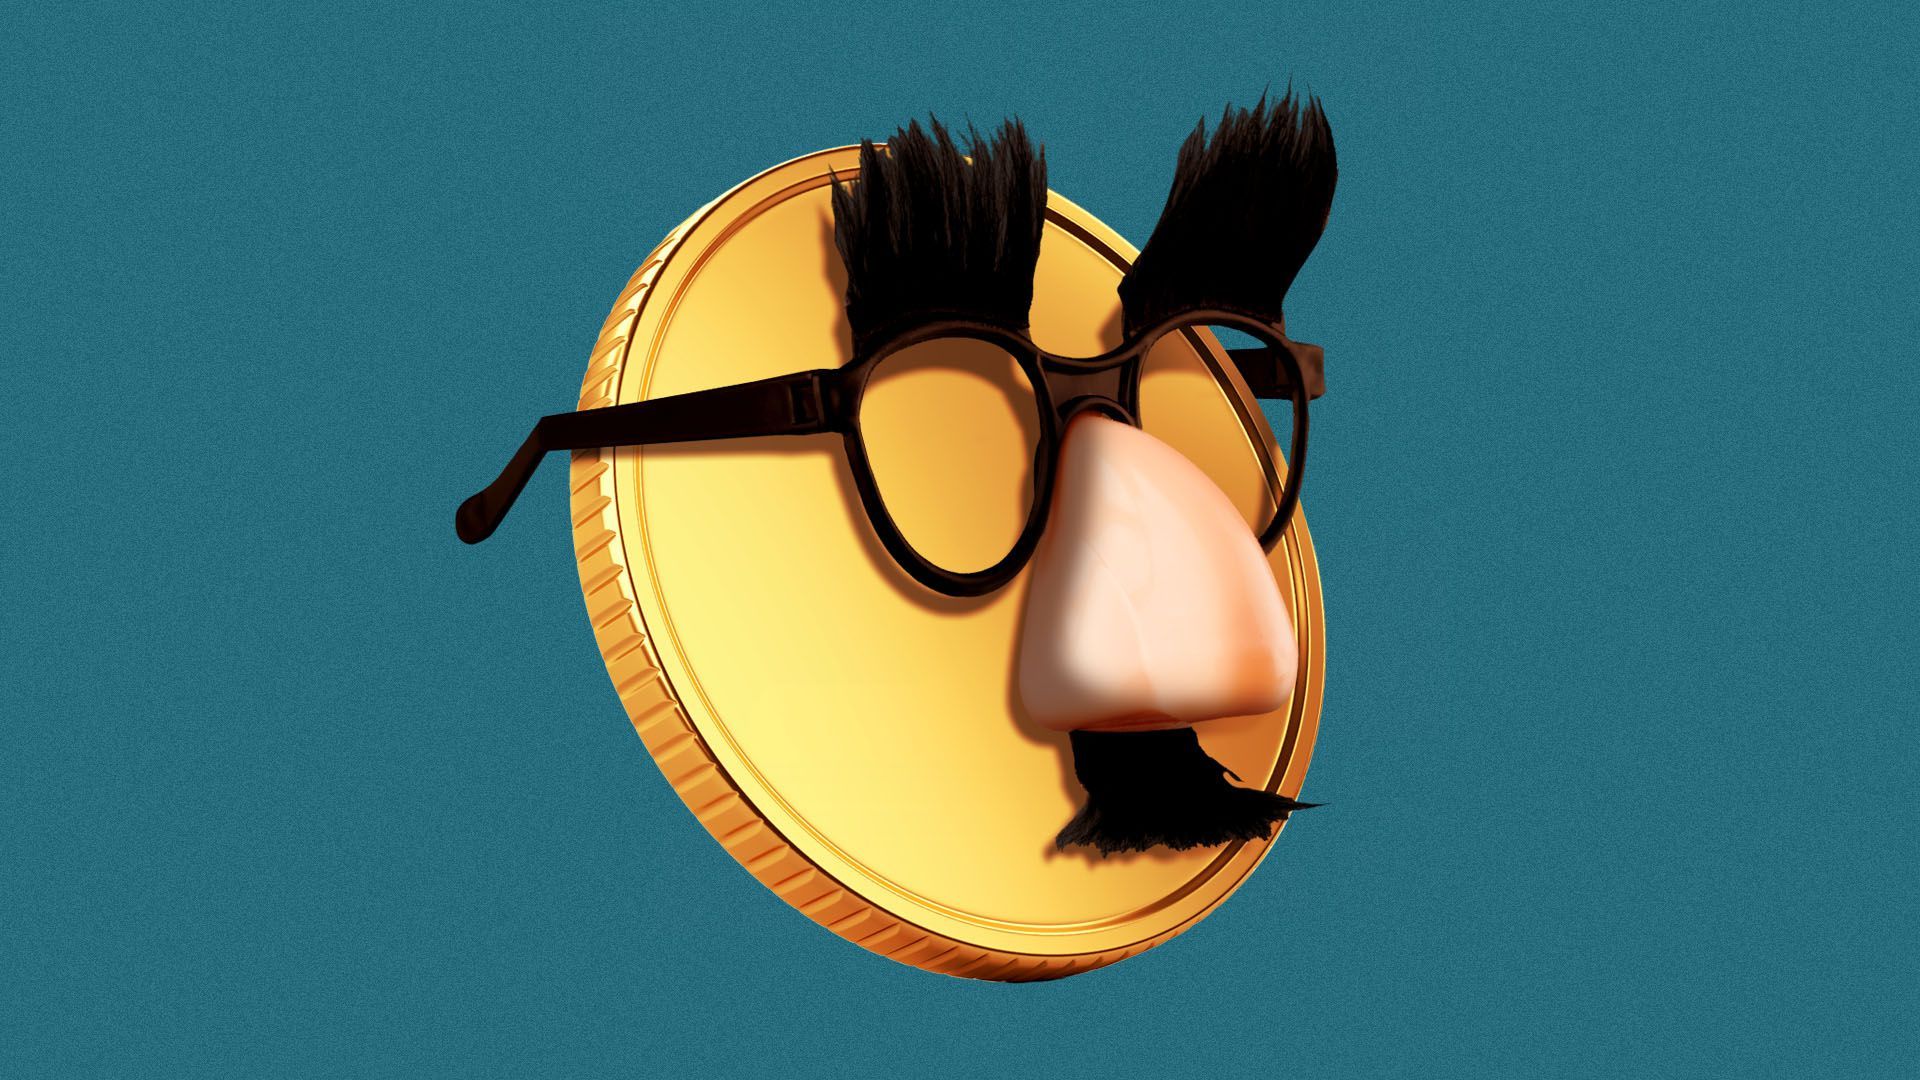 Illustration of a coin wearing a set of joke glasses